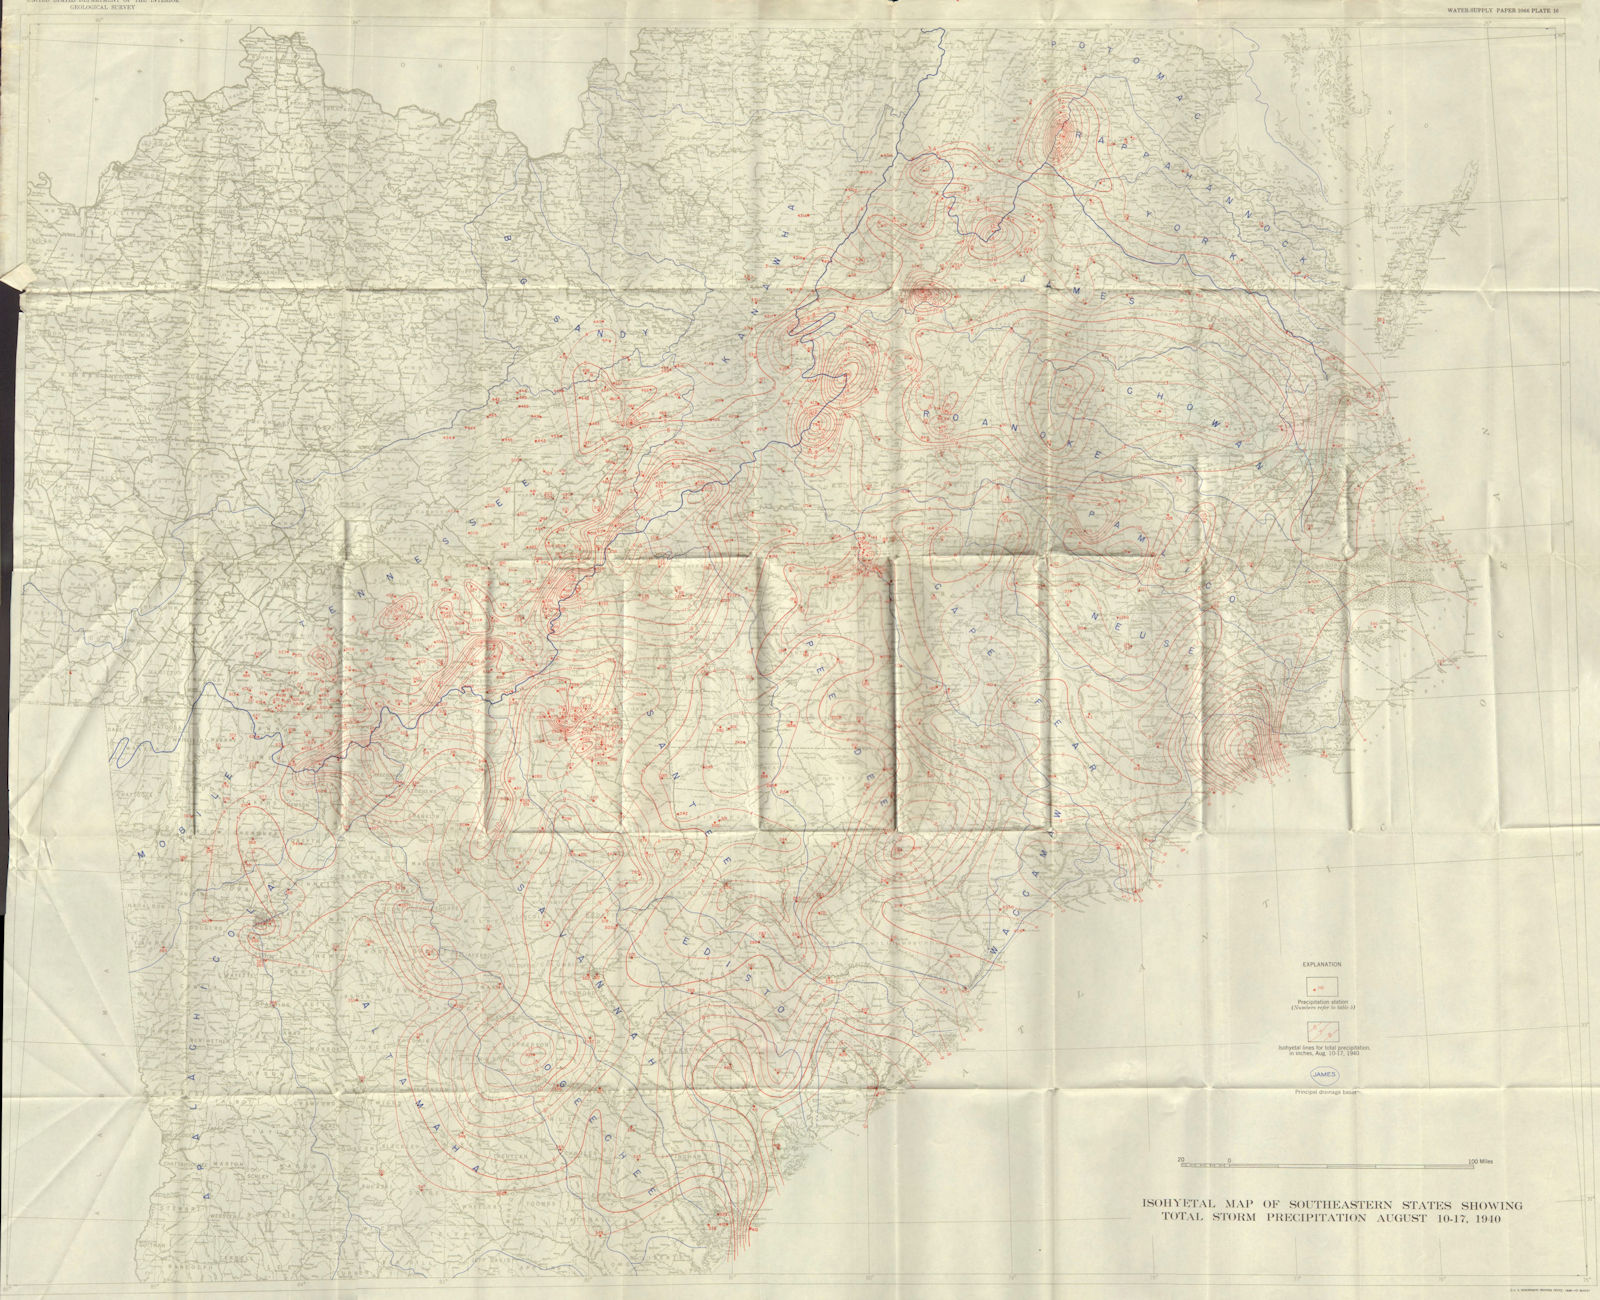 USA.10-17 Aug 1940 Floods.Southeastern States.Isohyetal Map precipitation 1948